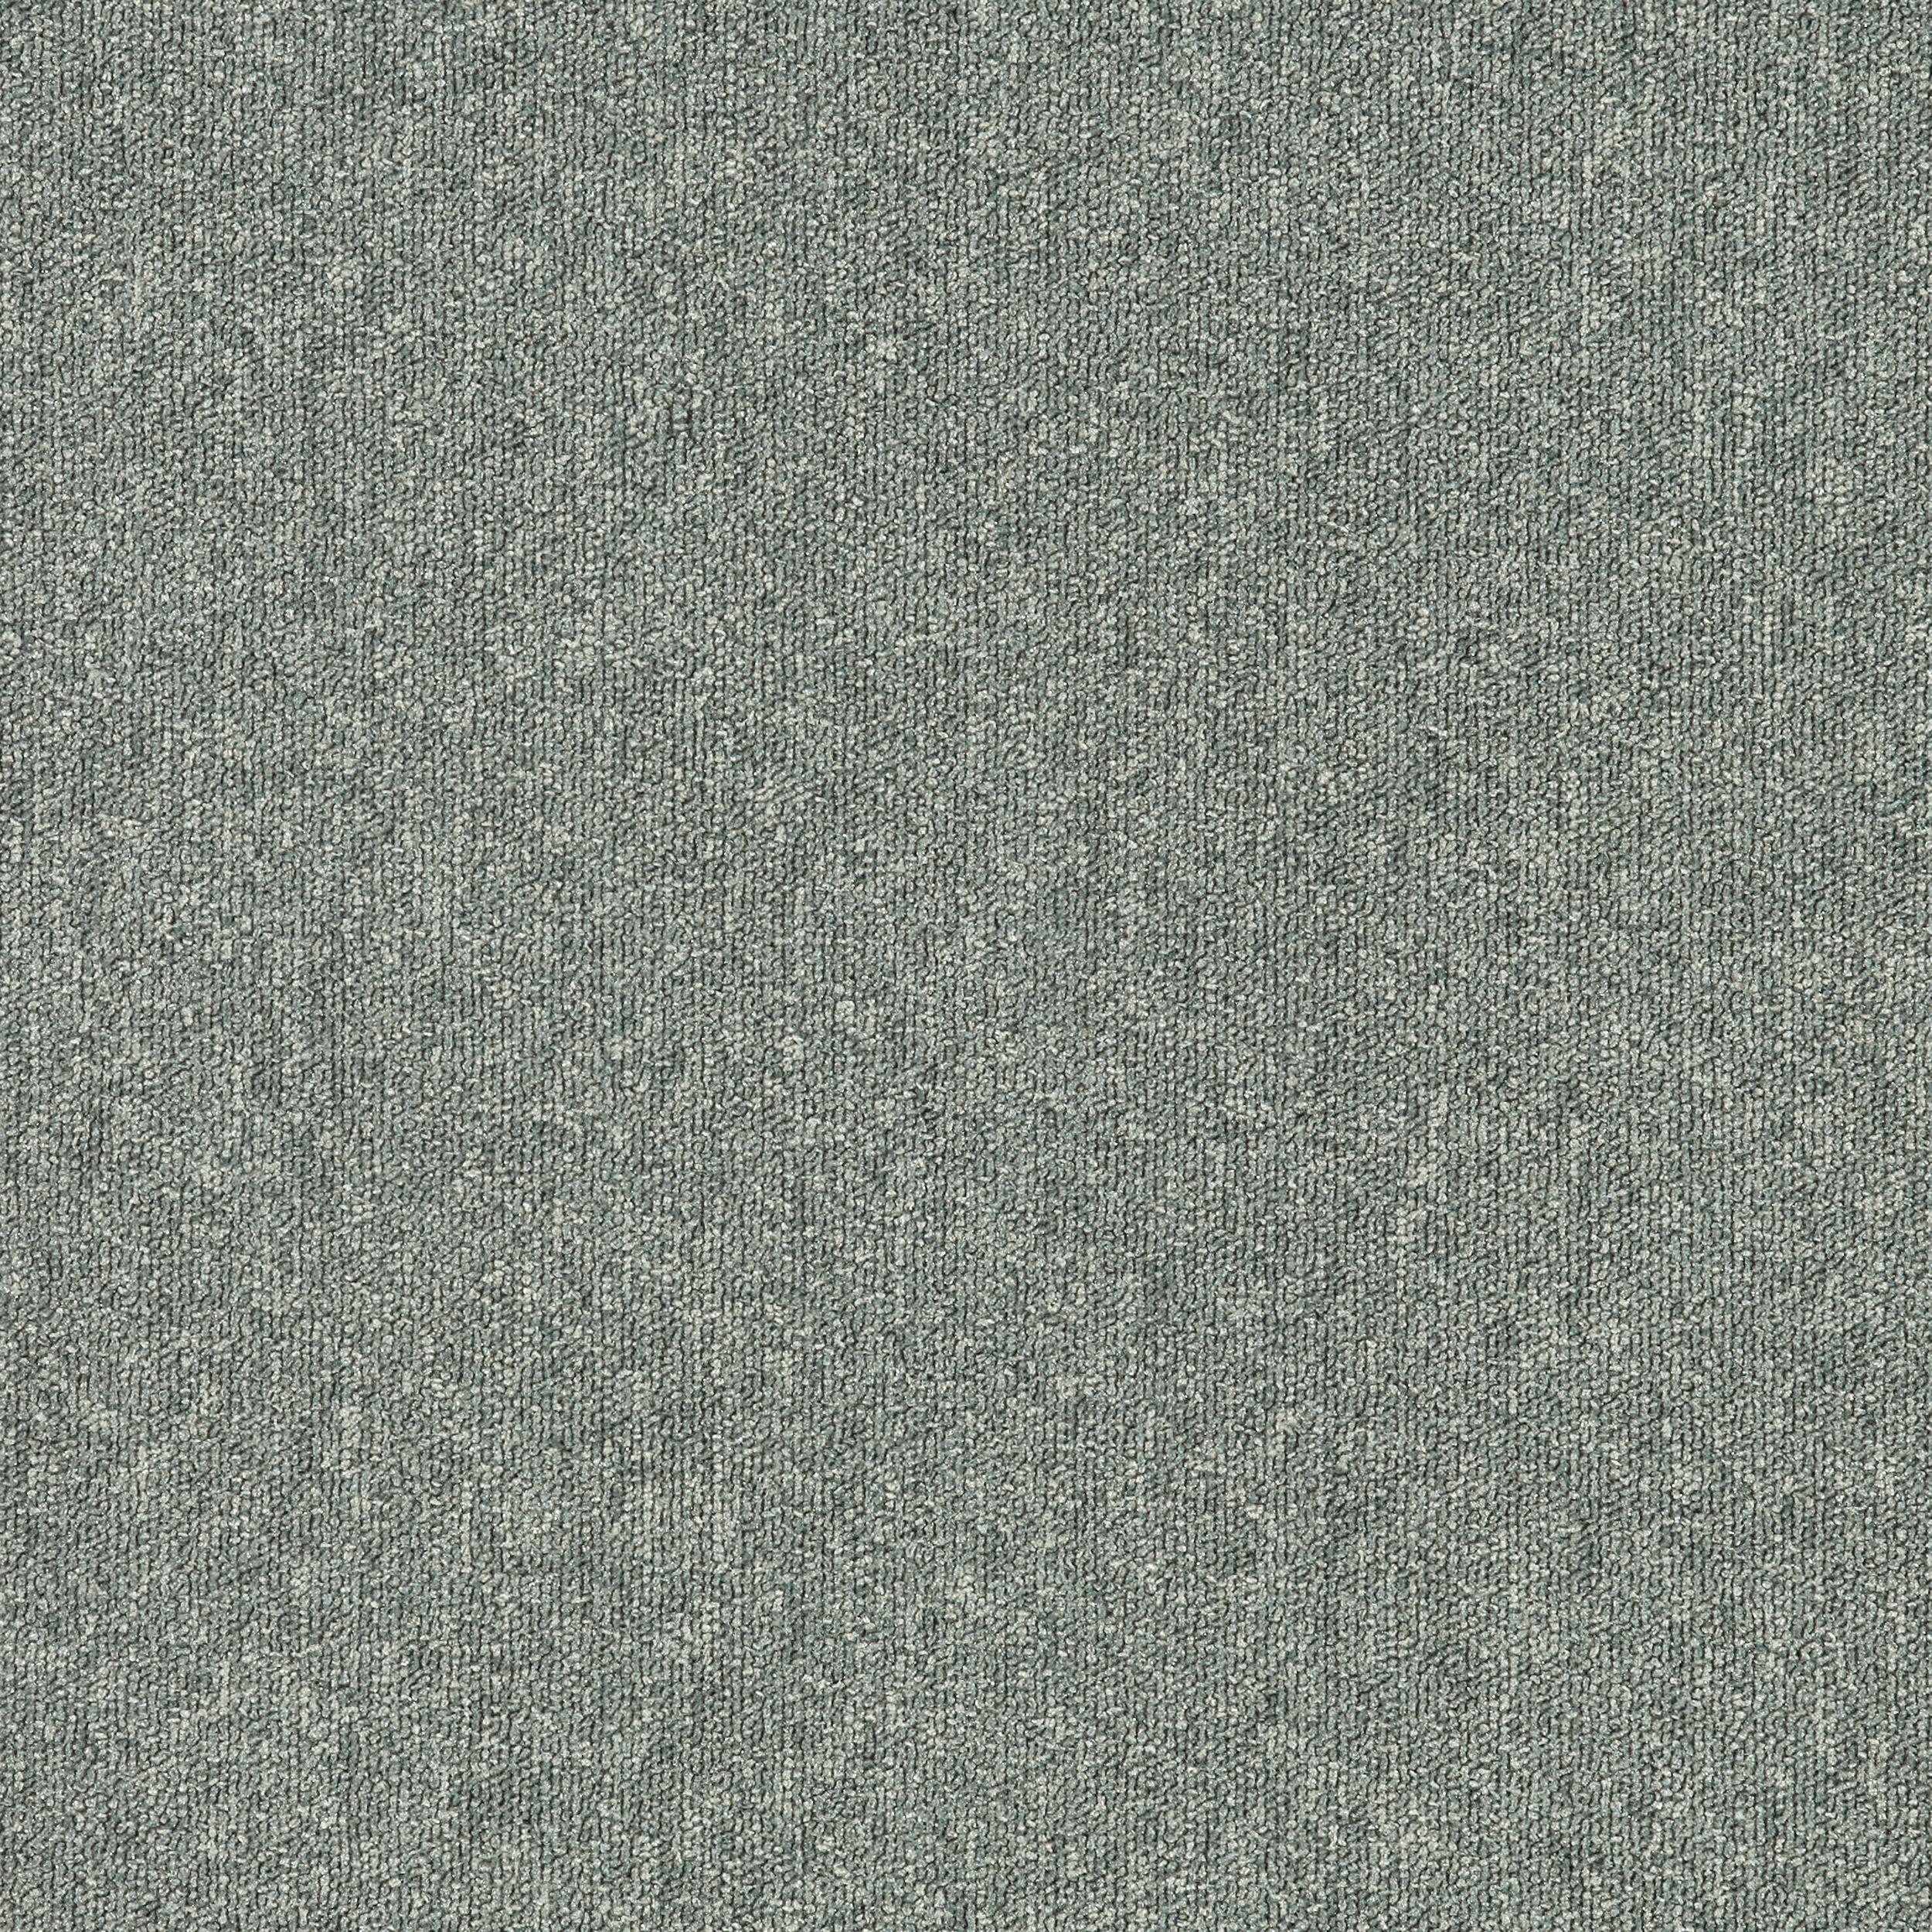 Heuga 580 II carpet tile in Oyster número de imagen 2